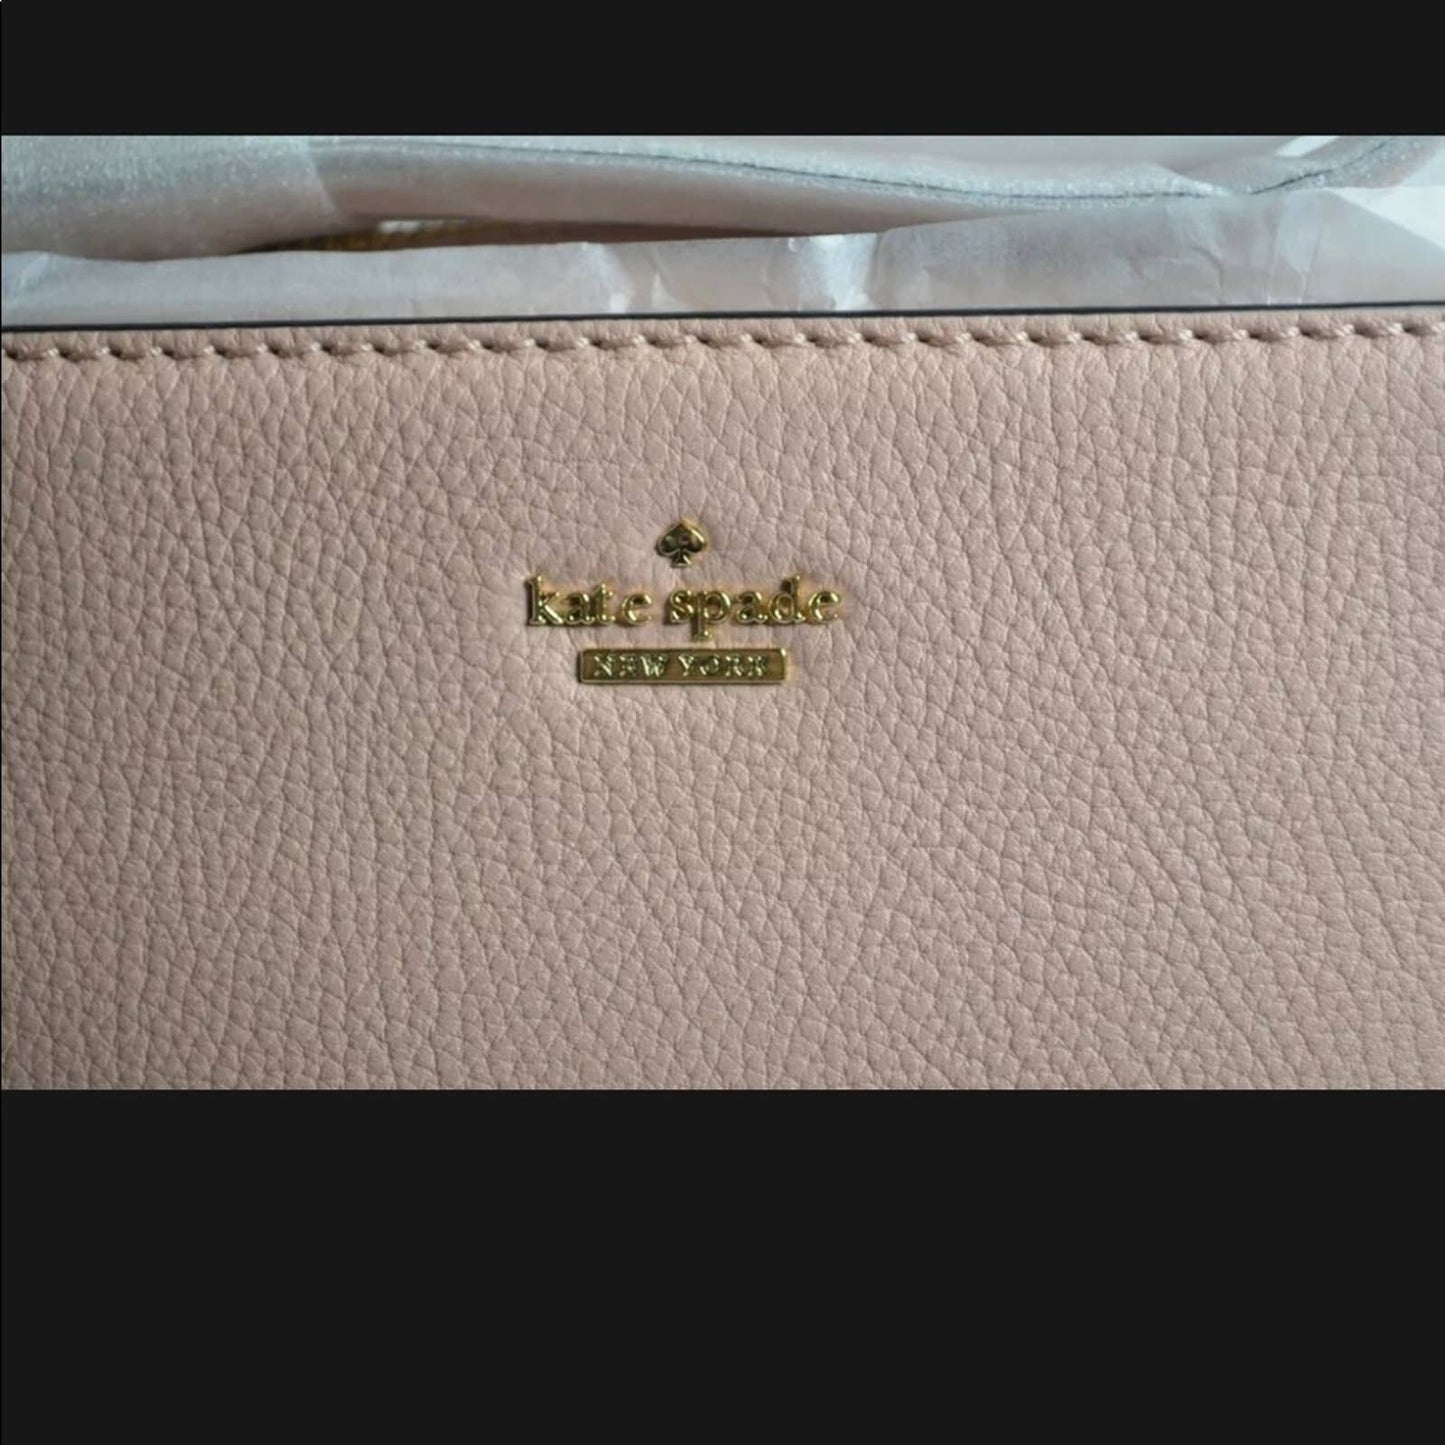 Kate Spade “Kingston Drive” Pale Pink Leather Crossbody Bag, Gold Hardware